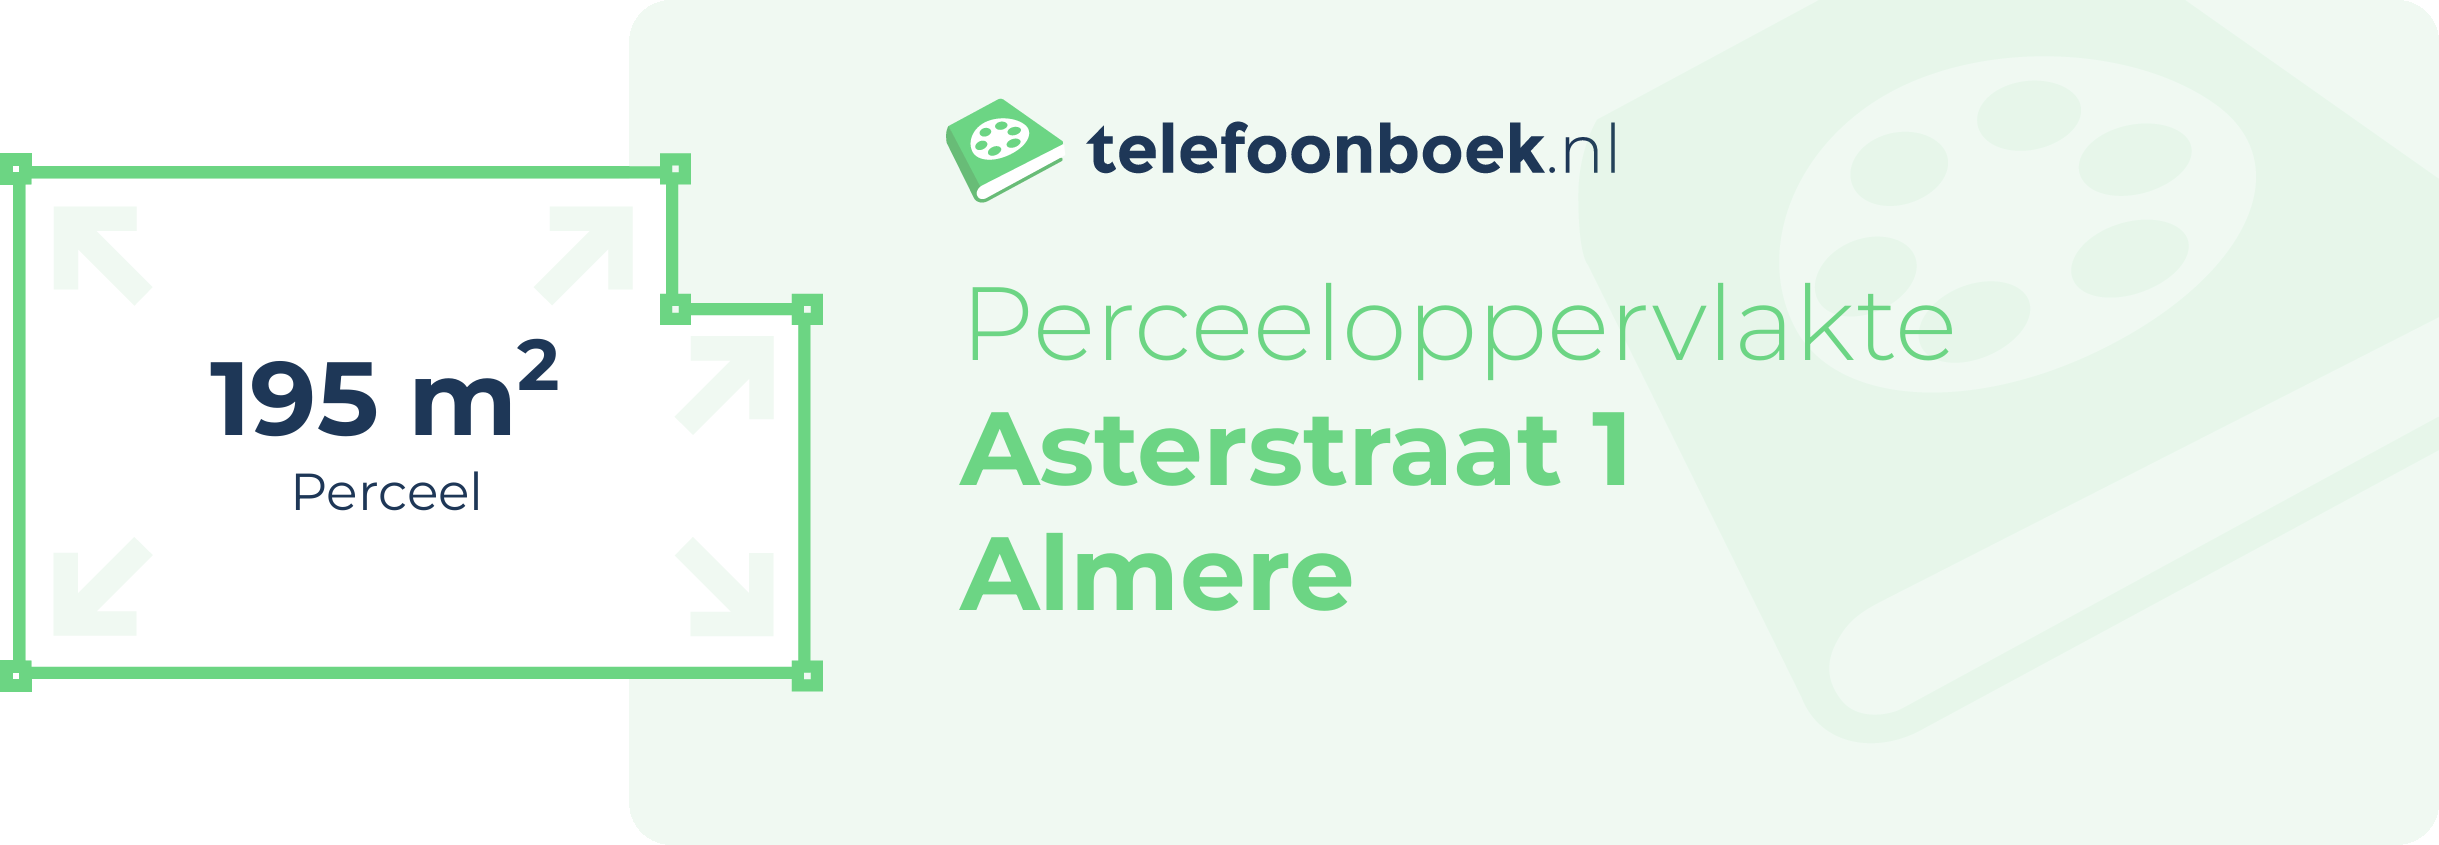 Perceeloppervlakte Asterstraat 1 Almere